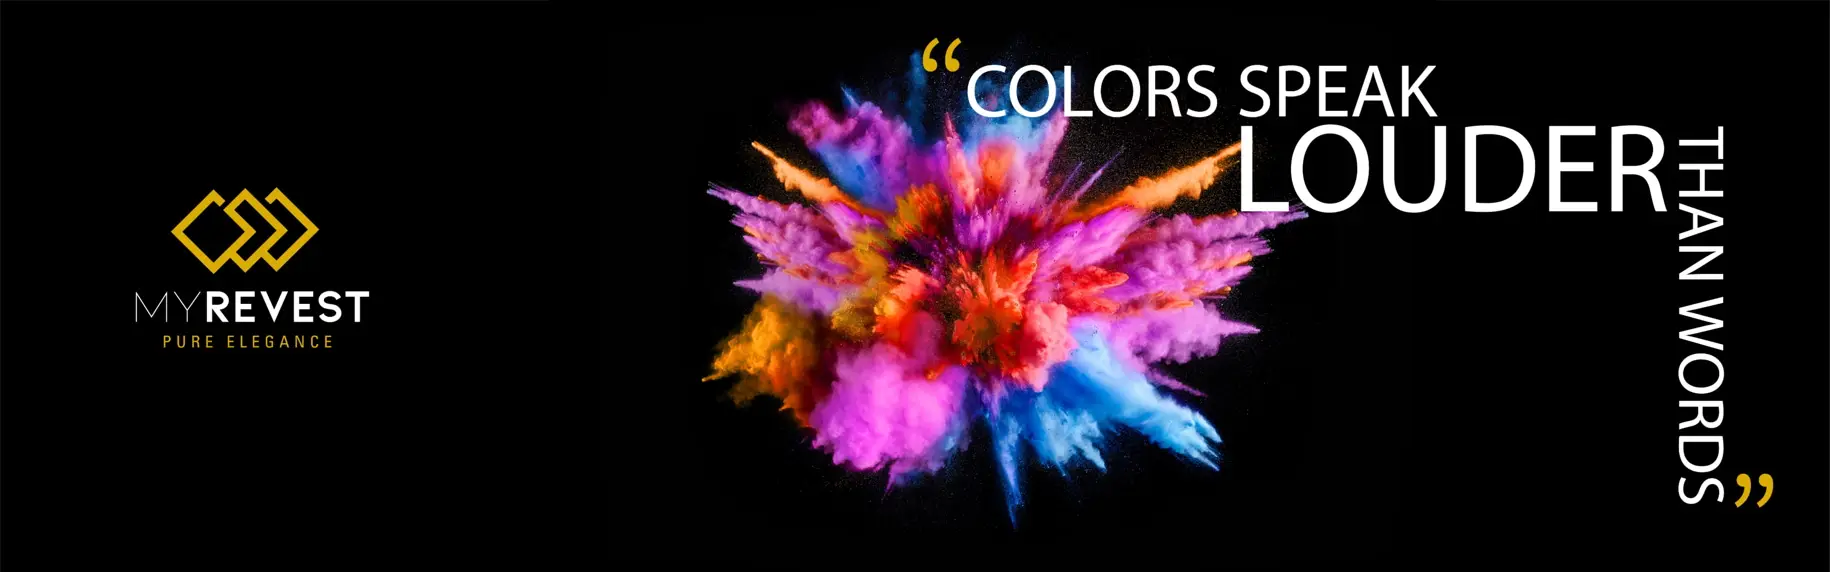 Kleurexplosie in blauwe, paarse, oranje en gele tinten